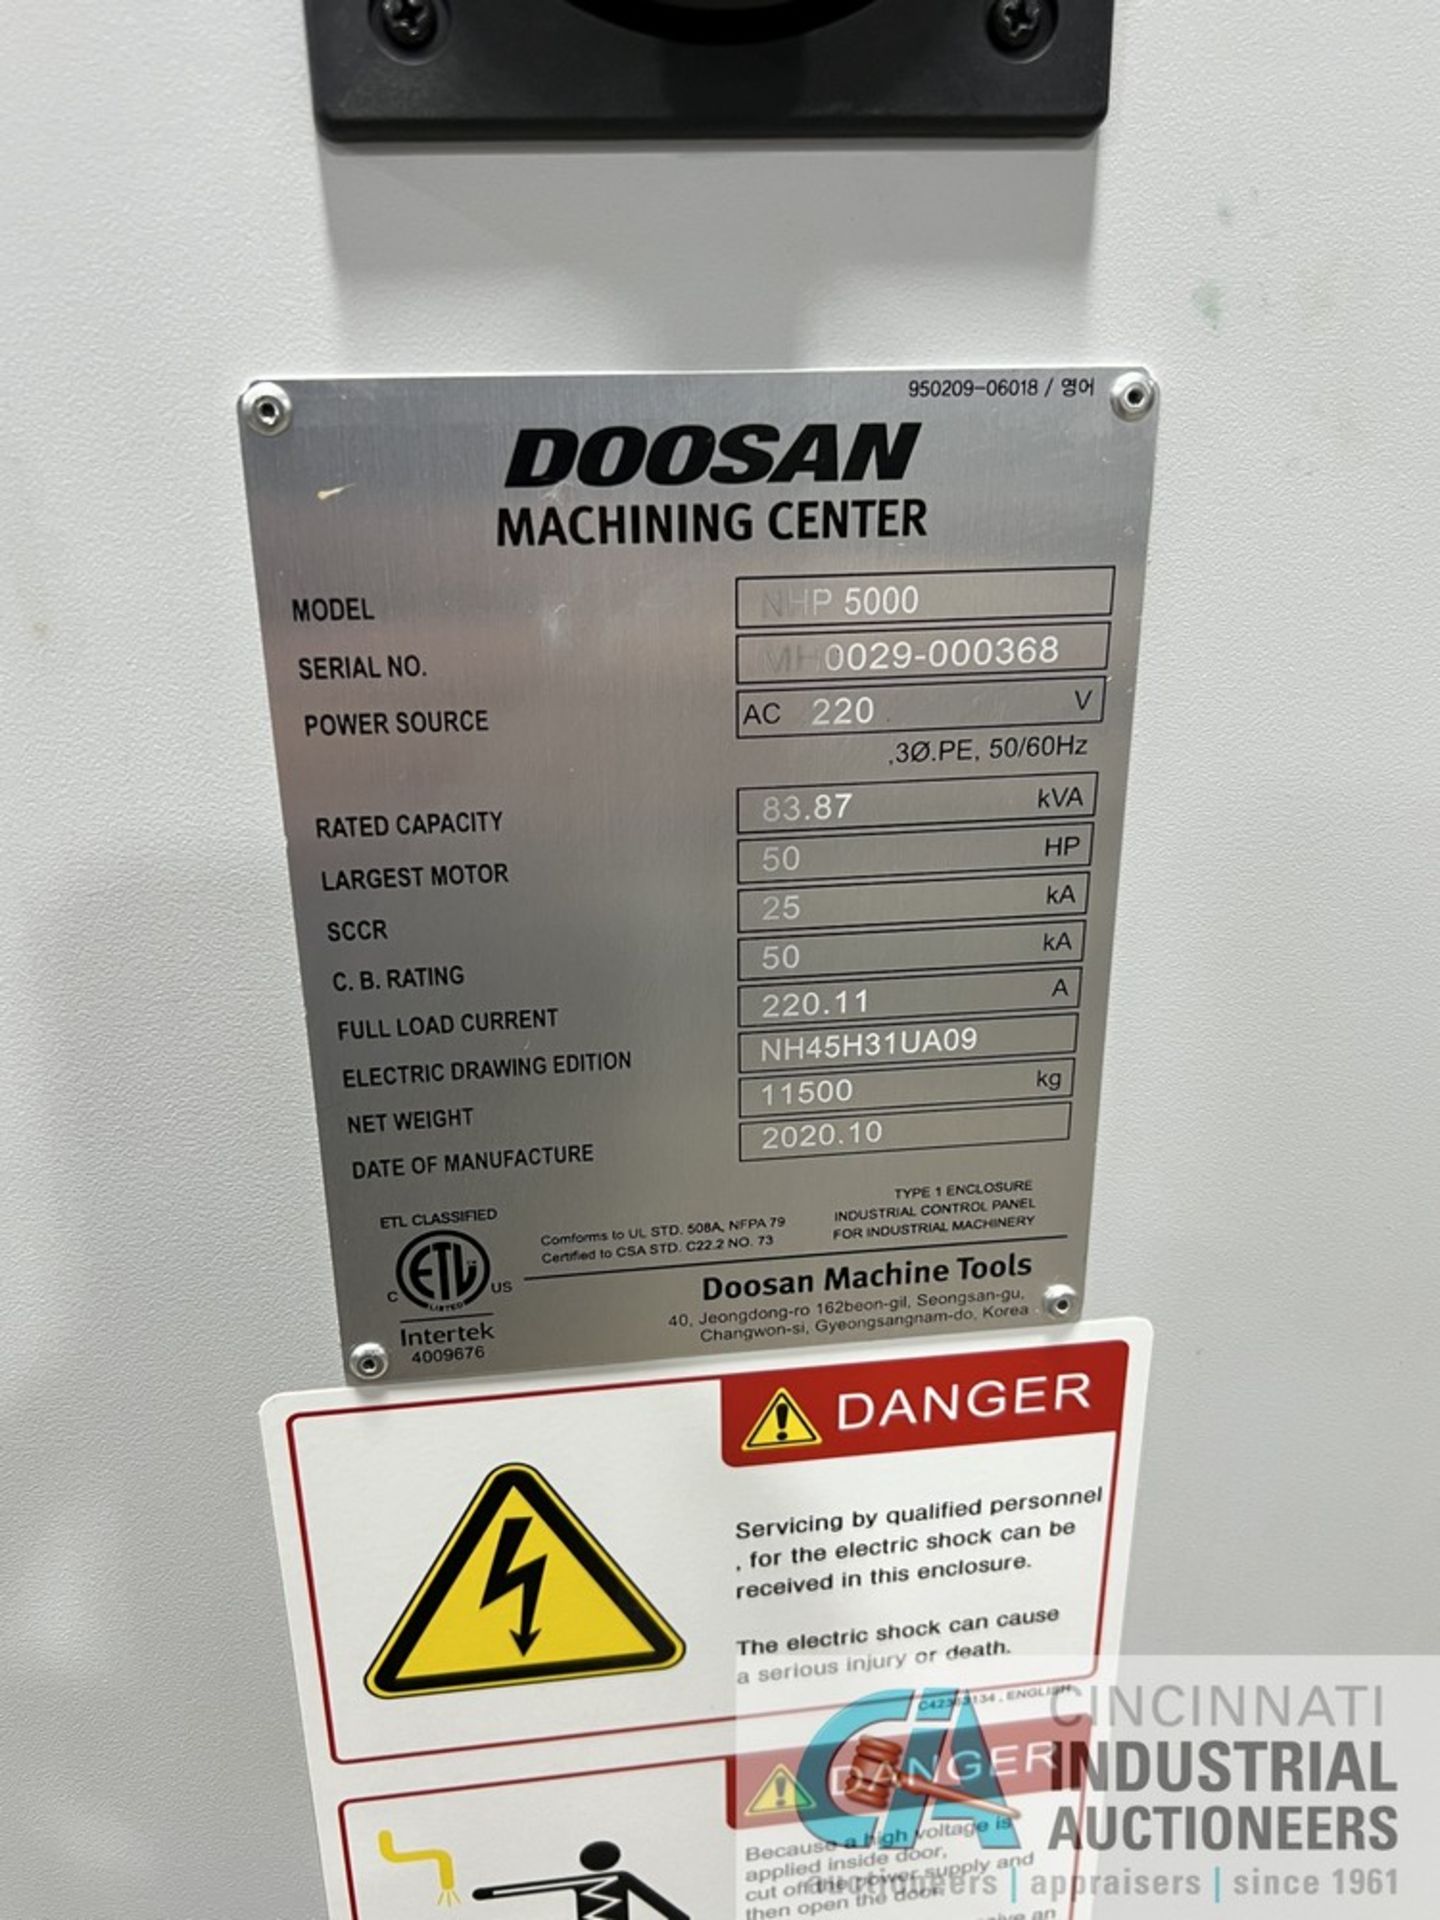 DOOSAN / DN SOLUTIONS MODEL NHP5000 CNC HORIZONTAL MACHINING CENTER; S/N MH0029-000368 (NEW 10/2020) - Image 11 of 31